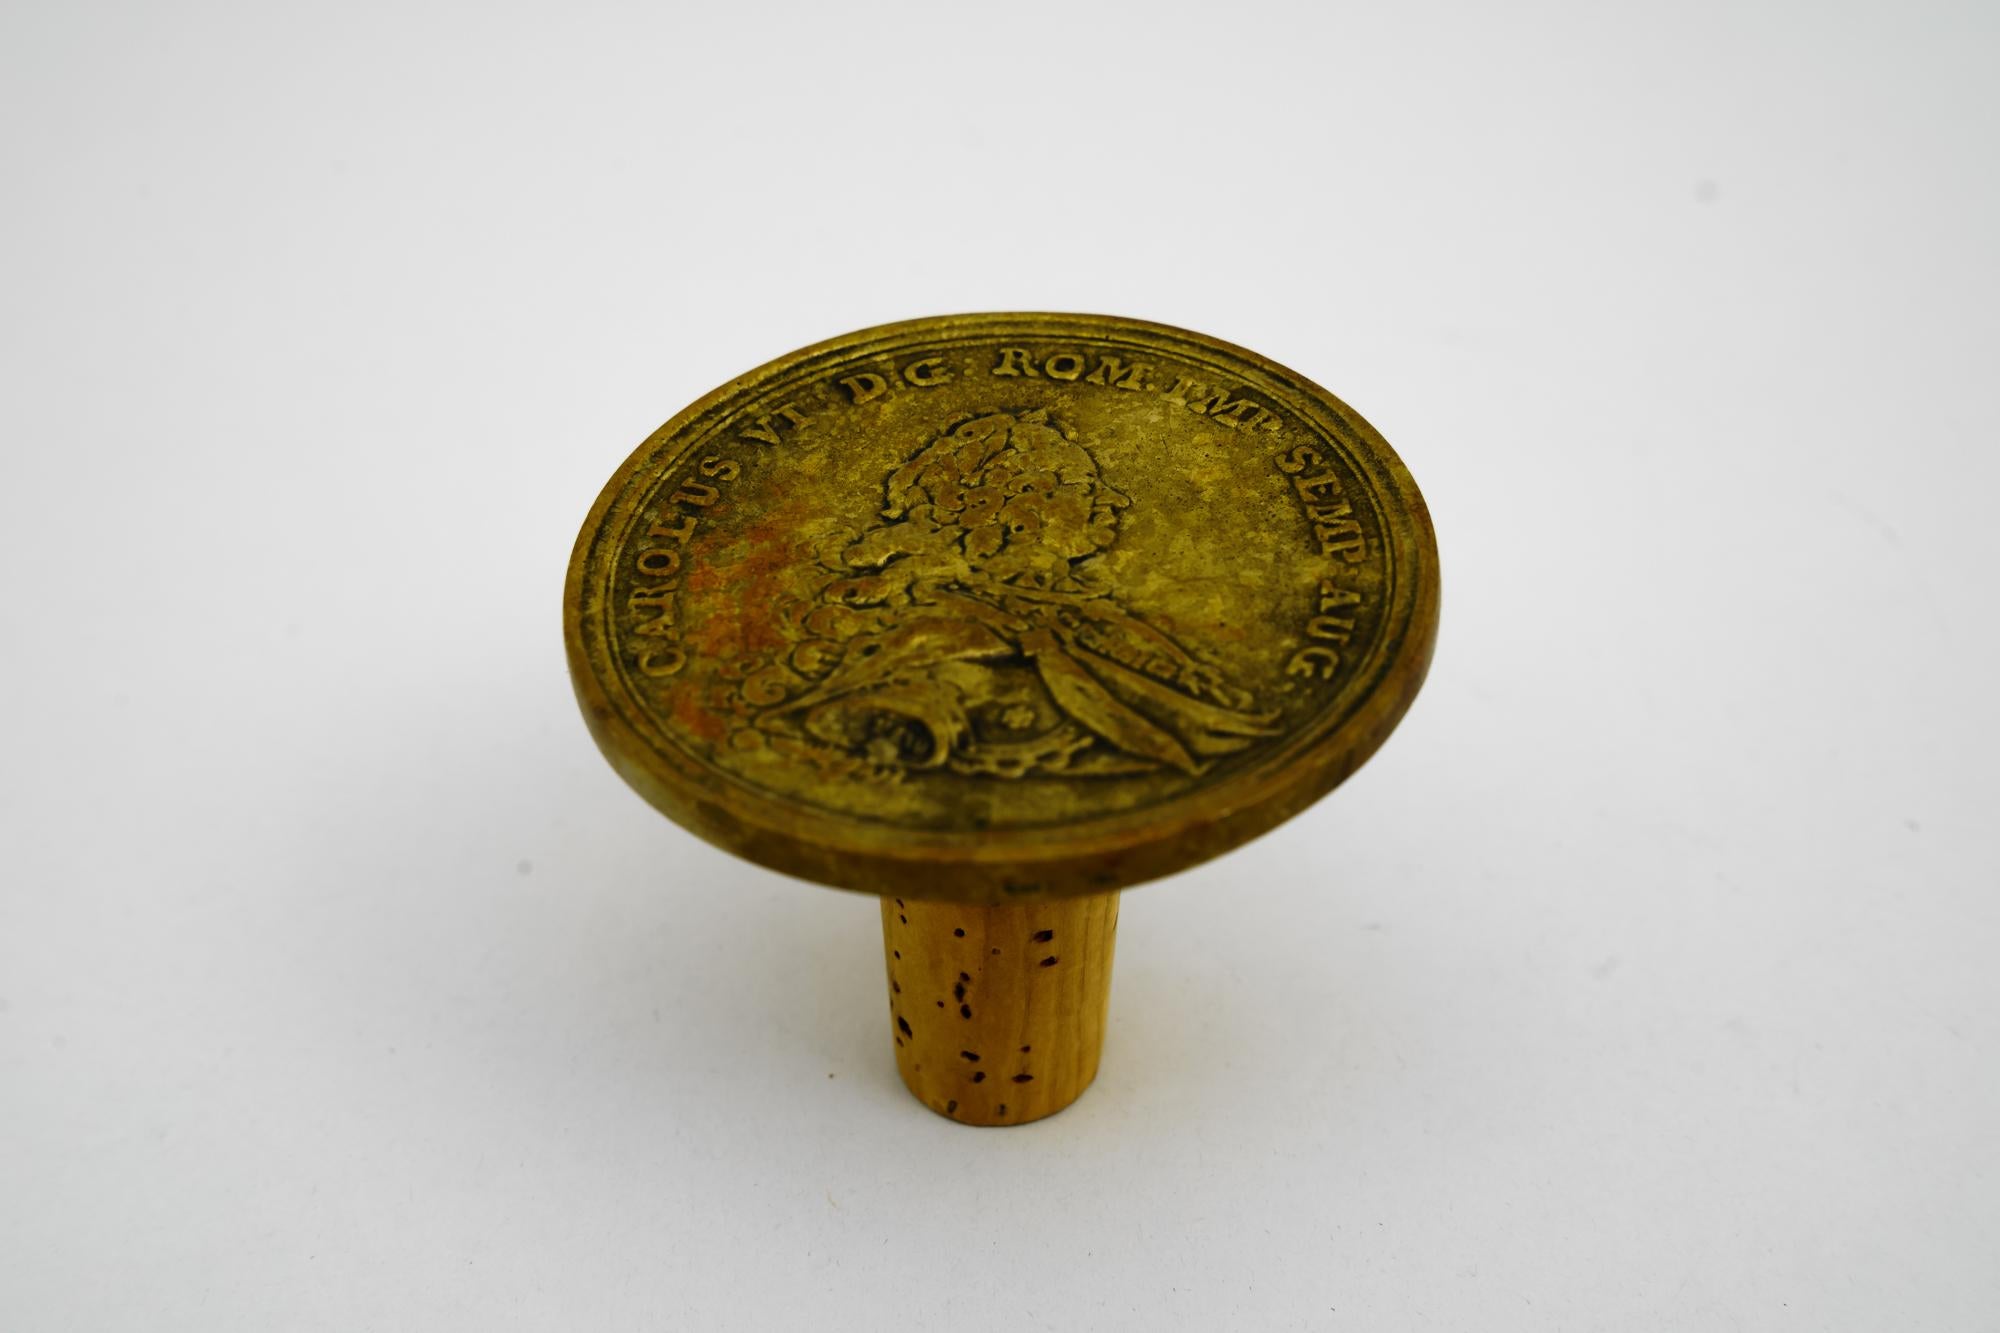 Carl Aubock brass coin bottle stopper, Austria, 1950s
Original condition.